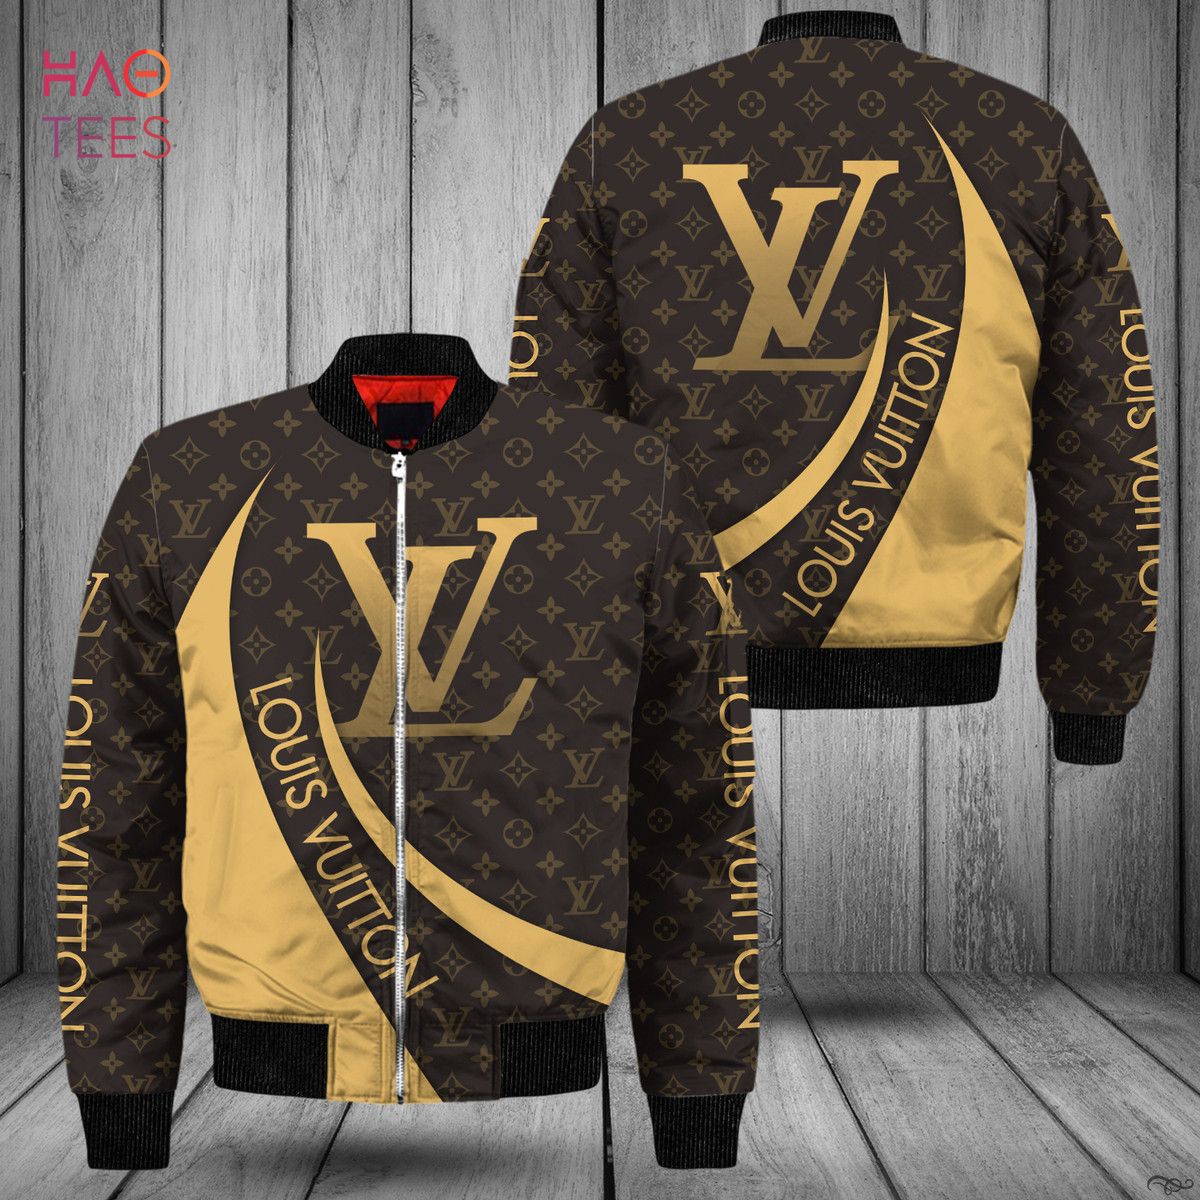 HOT Louis Vuitton Glod Mix Black Luxury Brand Bomber Jacket Limited Edition